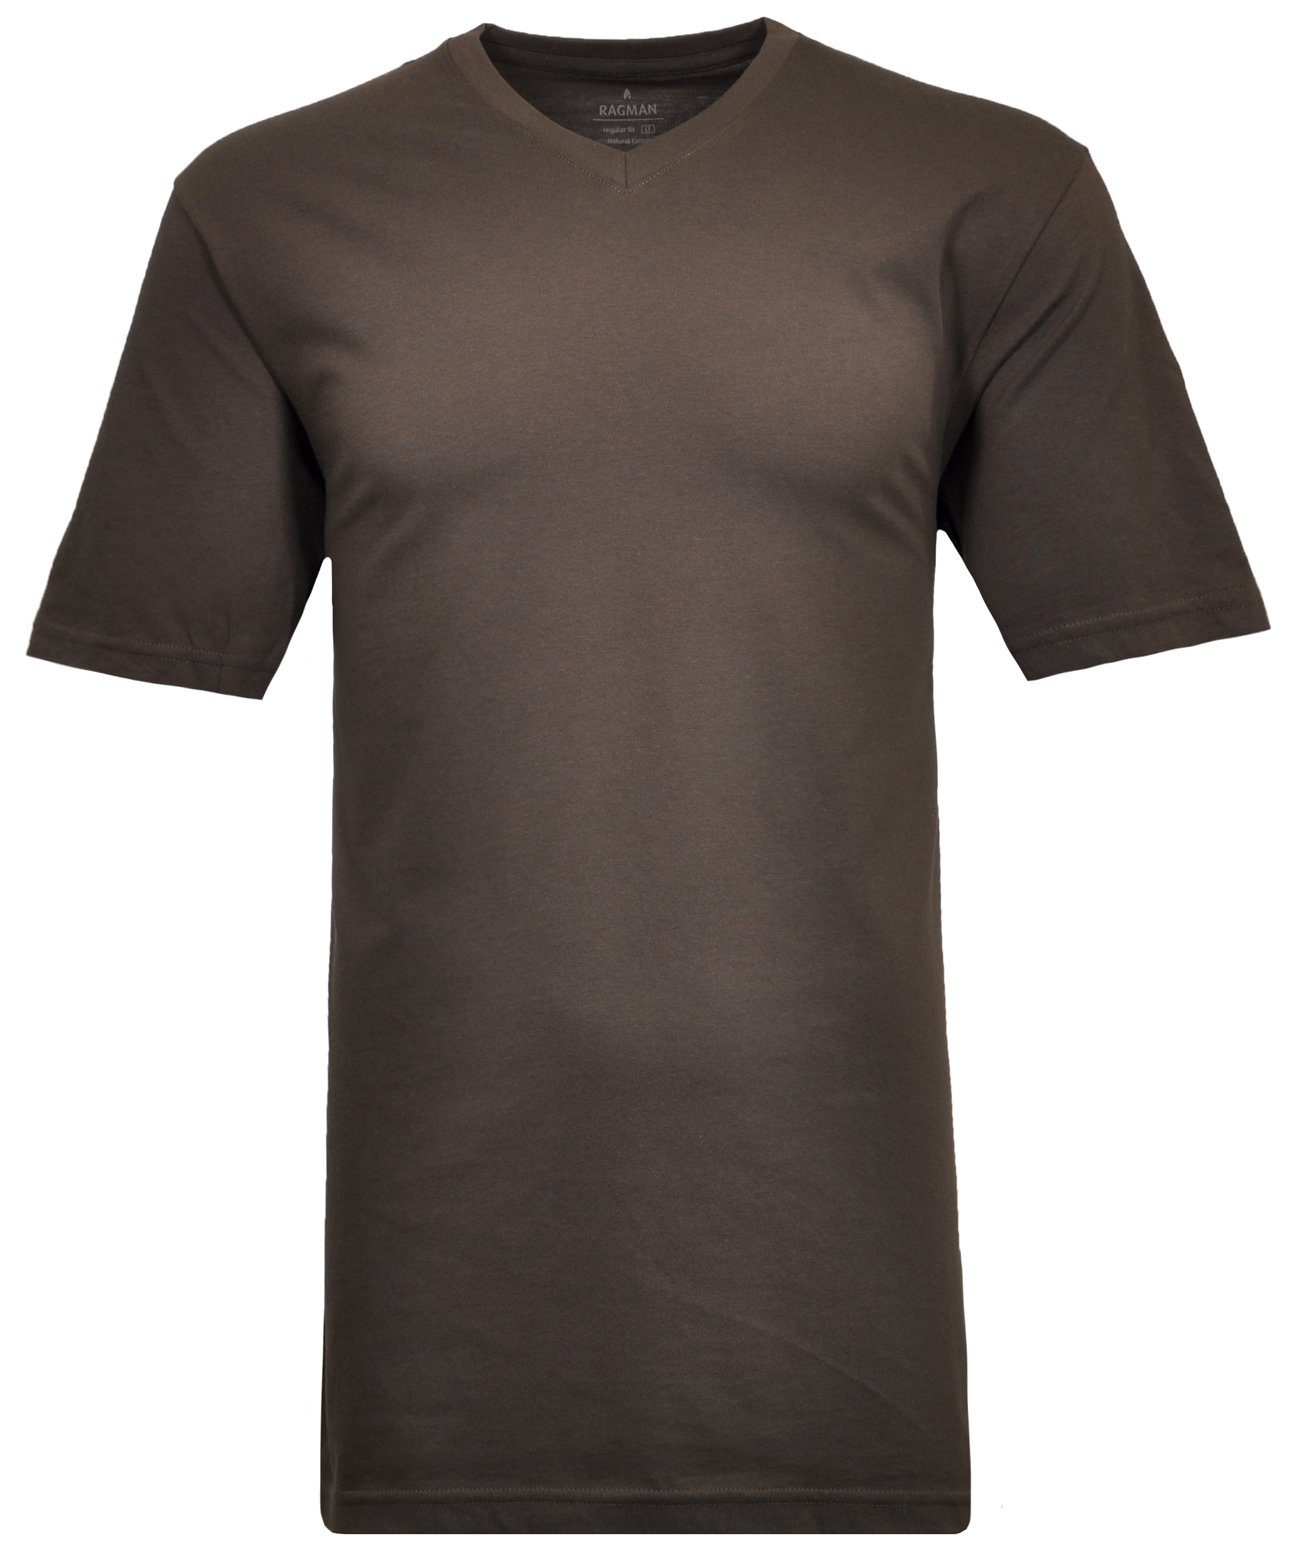 RAGMAN T-Shirt Braun